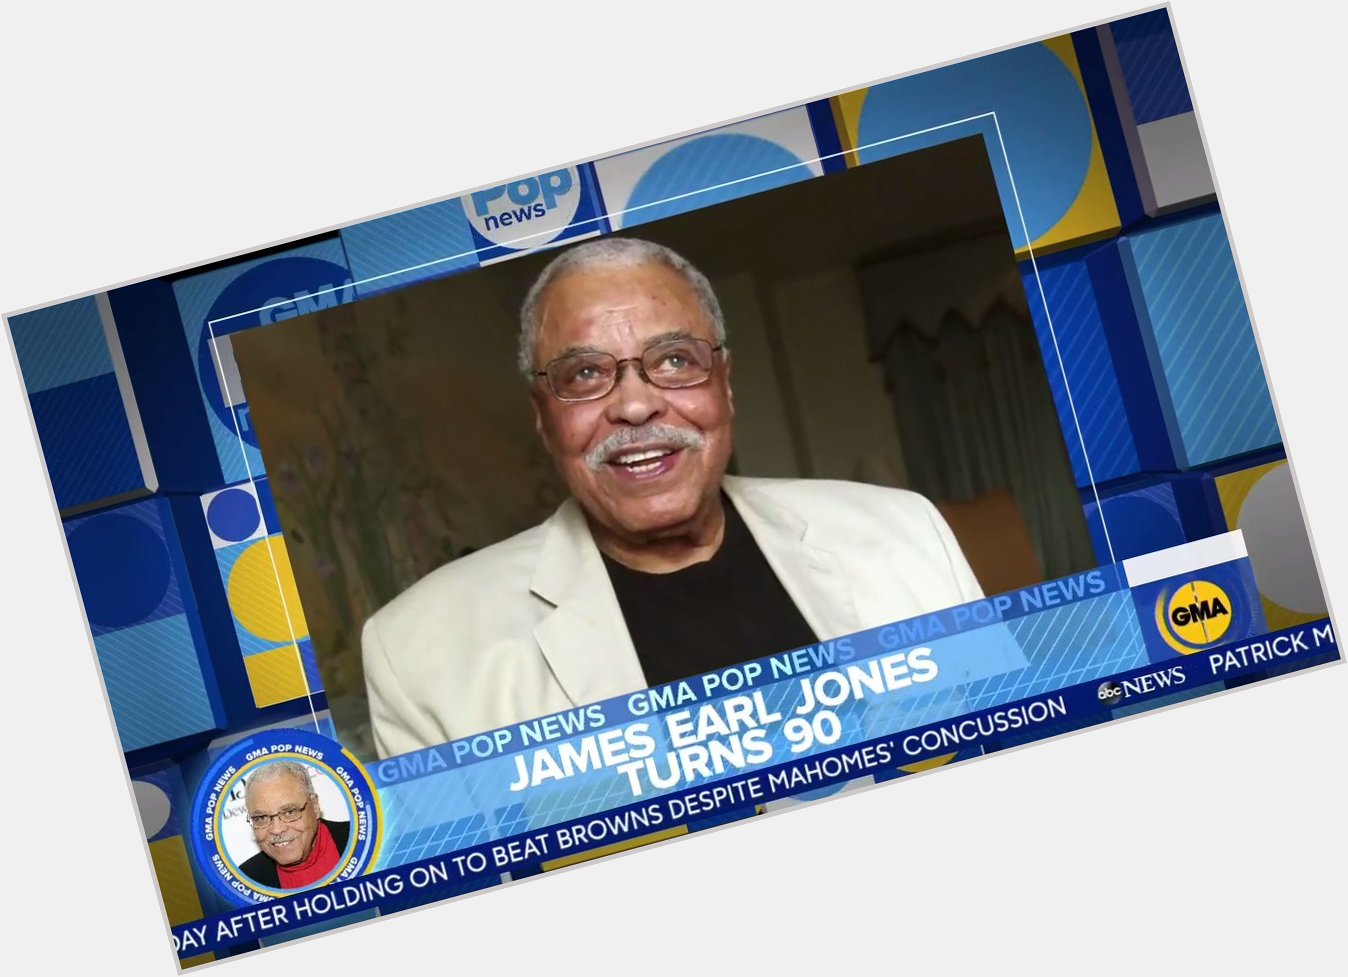 Happy birthday to the legendary James Earl Jones, who turned 90 on Sunday! 